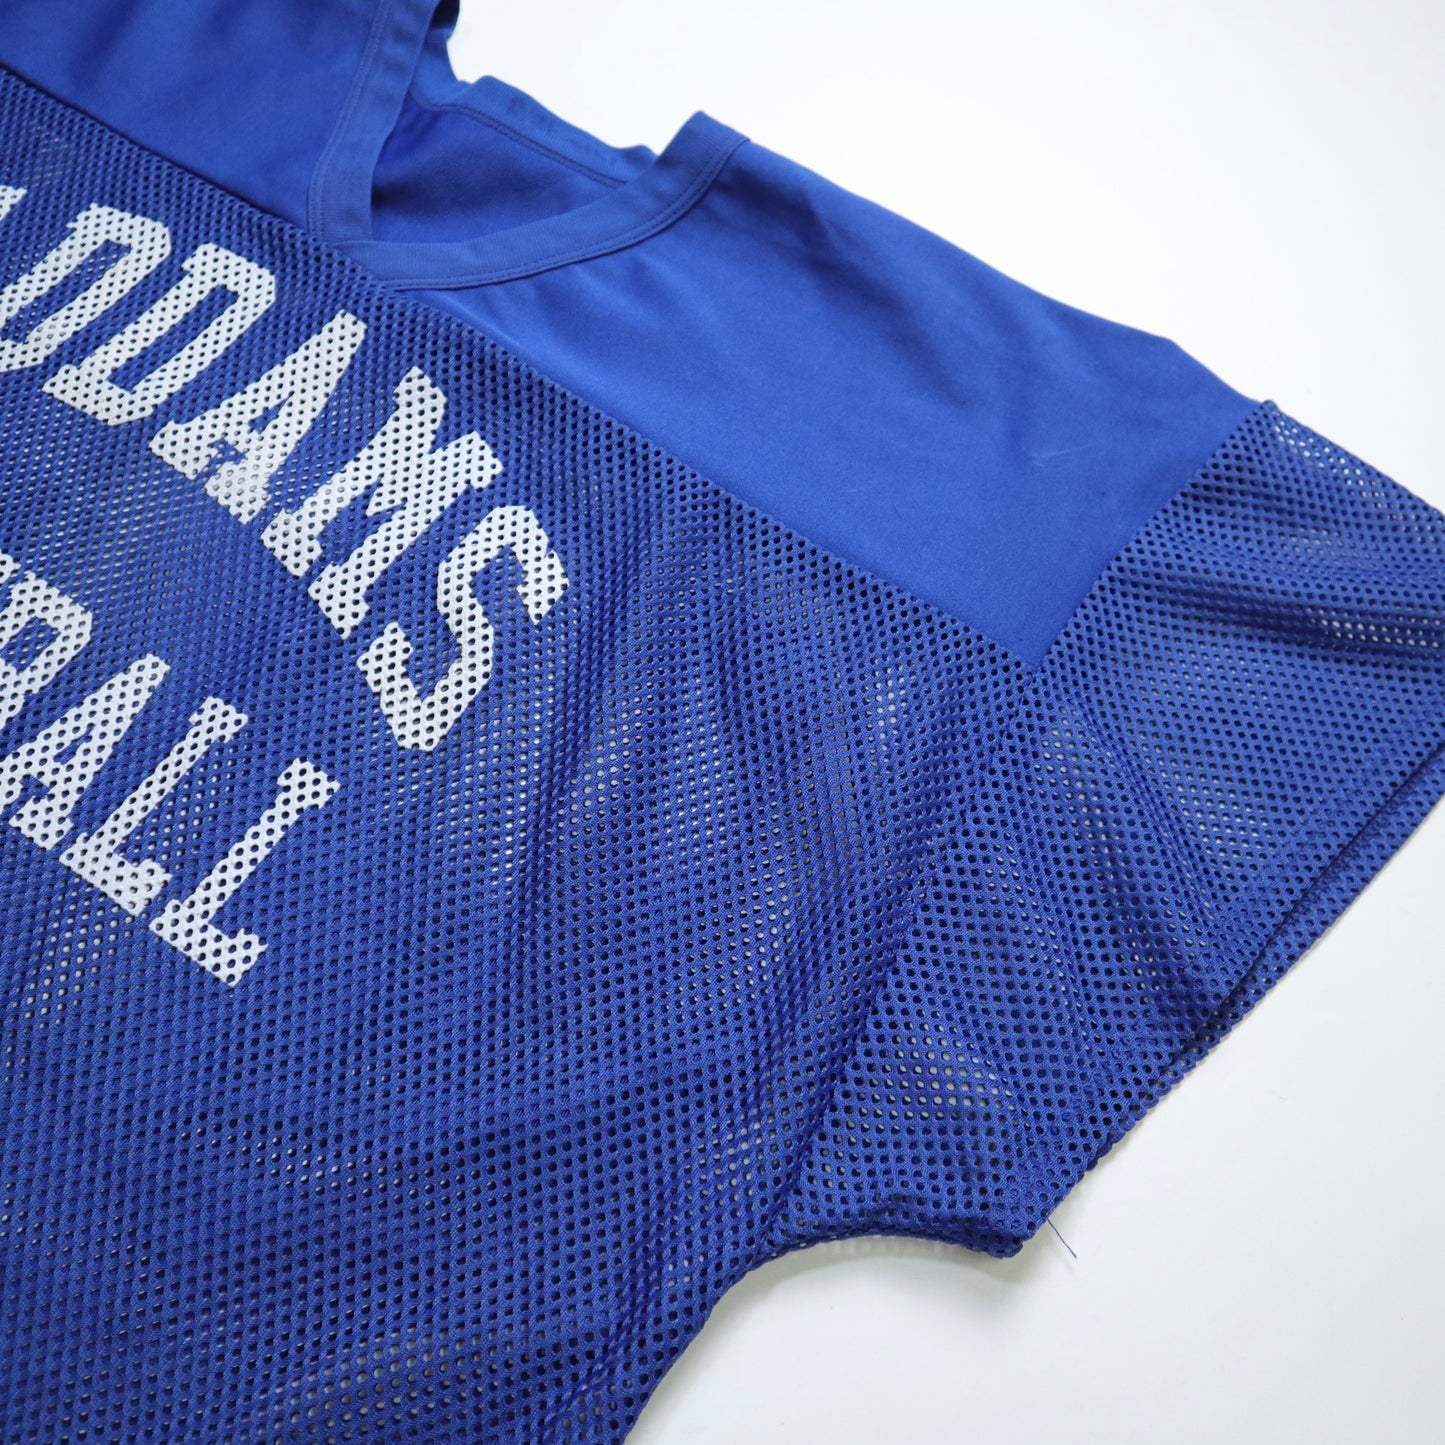 90s Russell 墨西哥製 Addams Football 寶藍色美式足球網洞衣